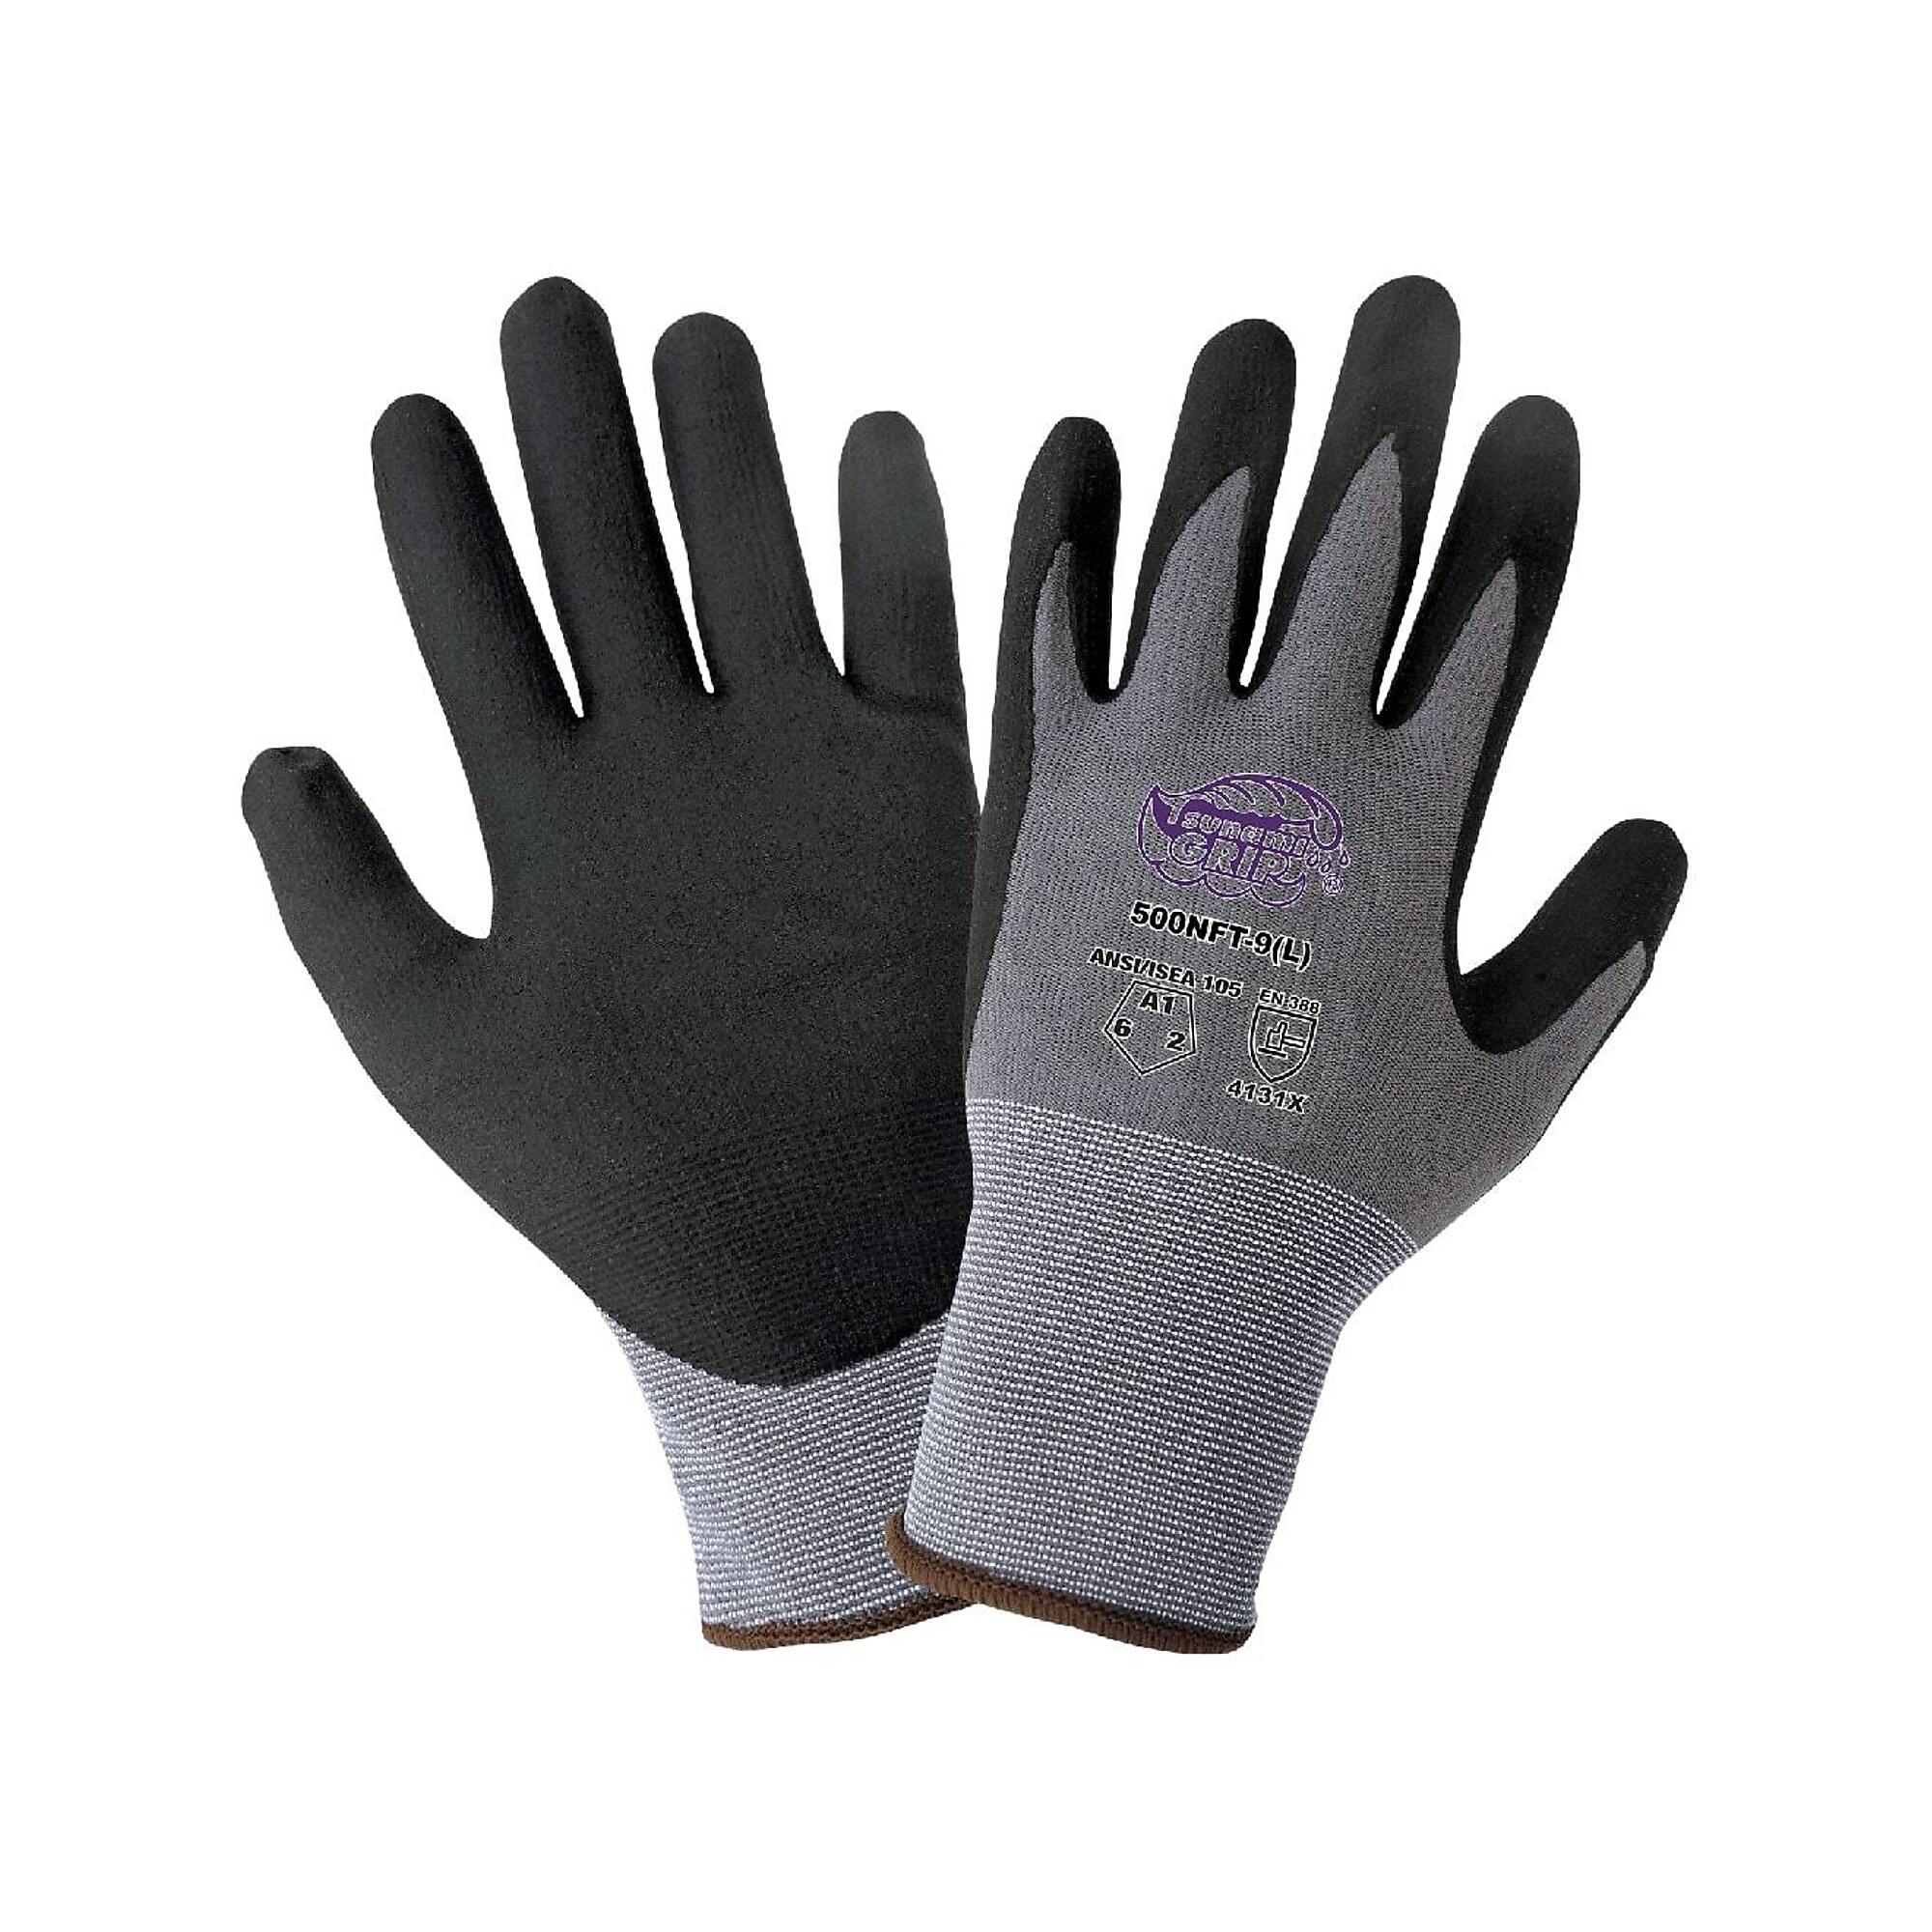 Global Glove Tsunami Grip , Gray, Black Nitrile Foam Palm, Cut Resist A1 Gloves- 12 Pair, Size L, Color Gray/Black, Included (qty.) 12 Model 500NFT-9(